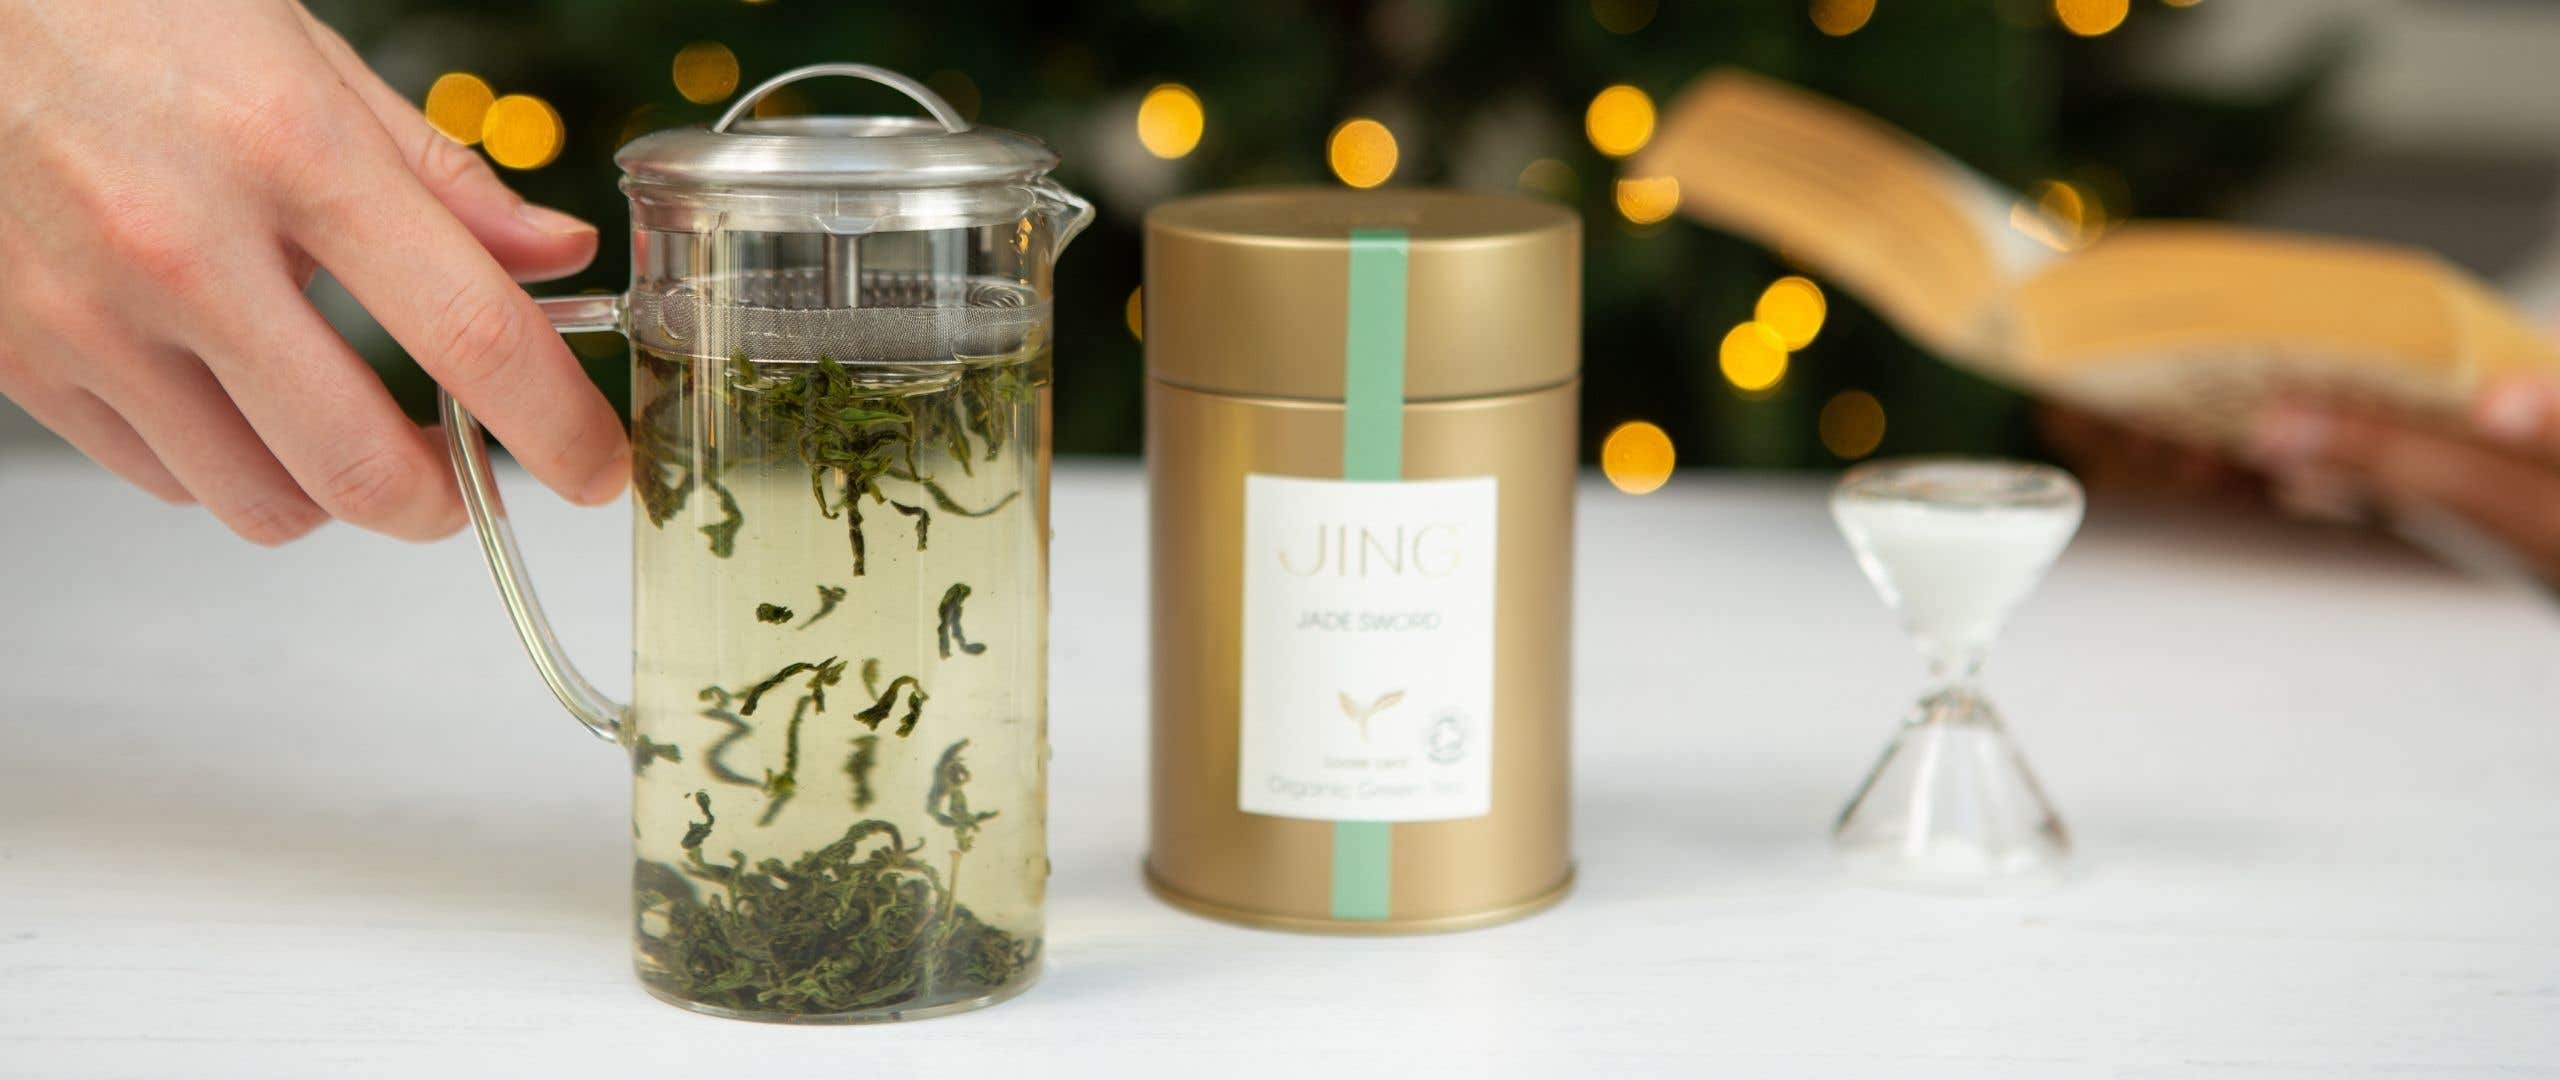 JING Loose leaf tea | Buying a tea gift set